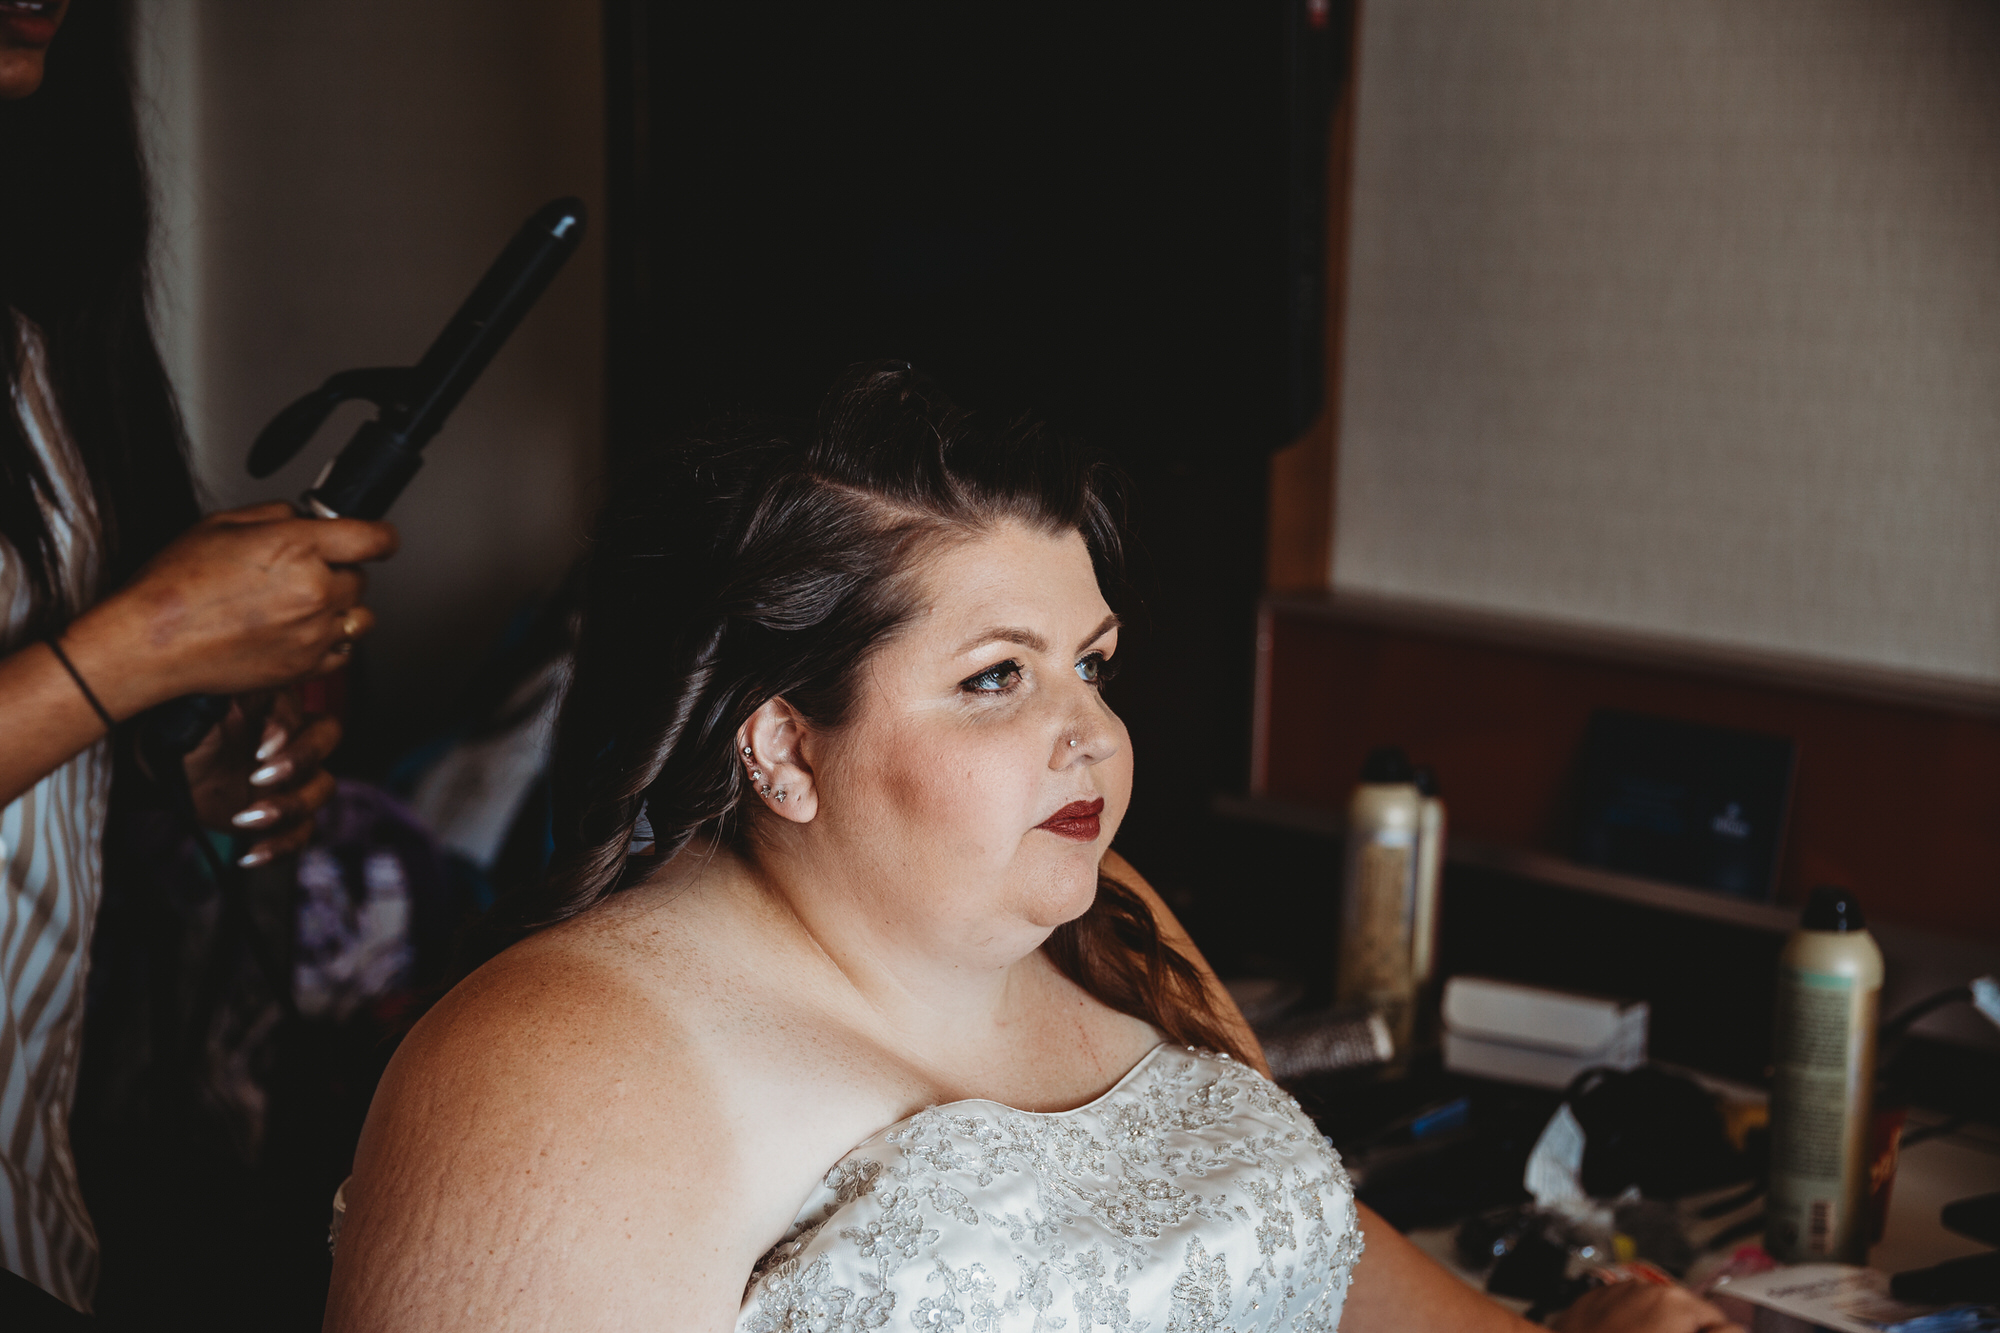 Mississauga wedding photographer Jennifer Blaak captures bride Samantha on her wedding day..